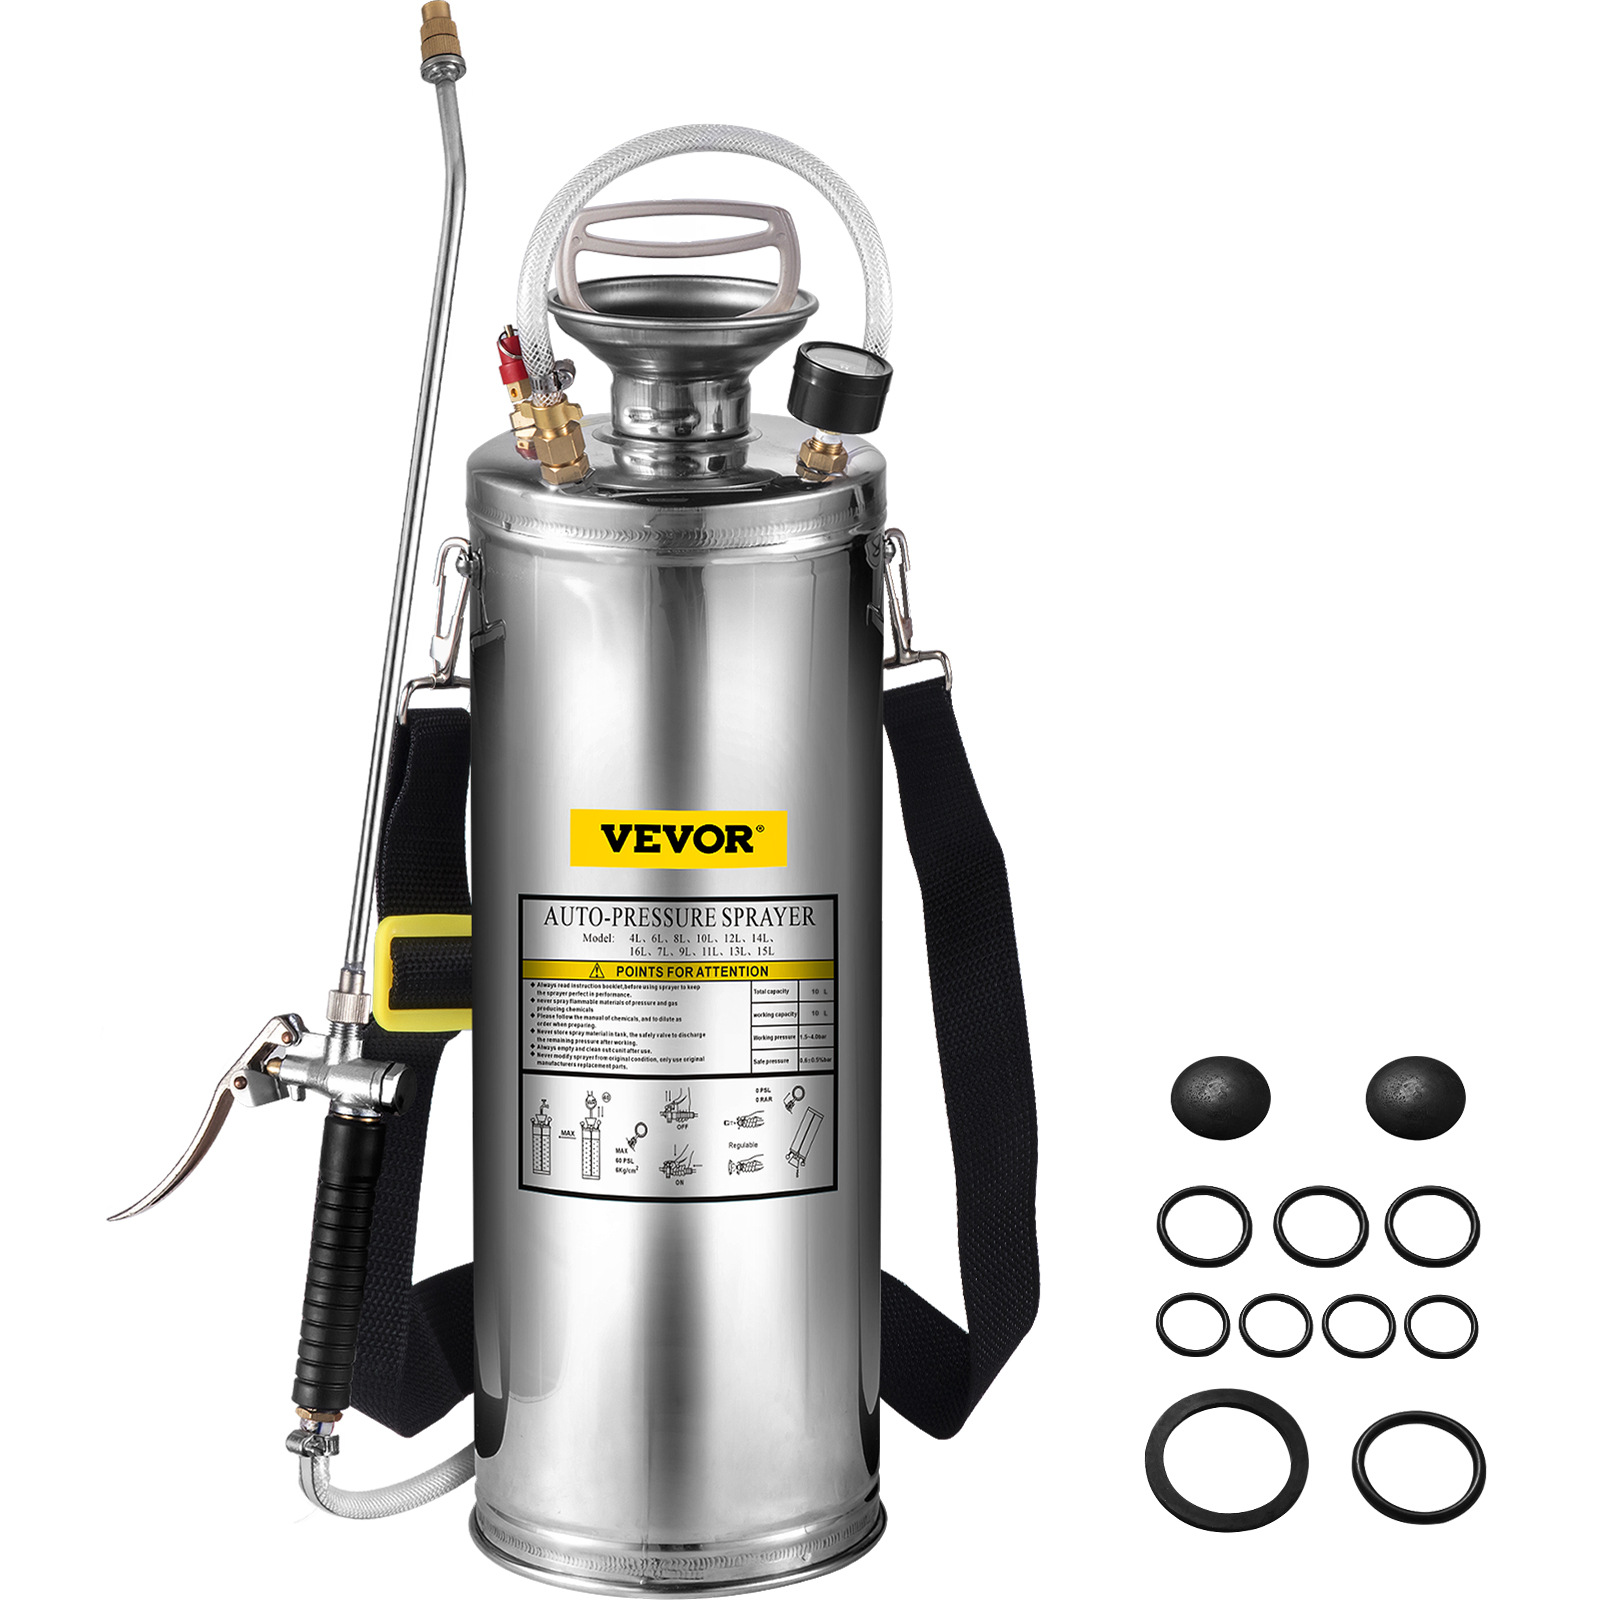 VEVOR 3 Gallon Stainless Steel Industrial Hand-Pumped Sprayer